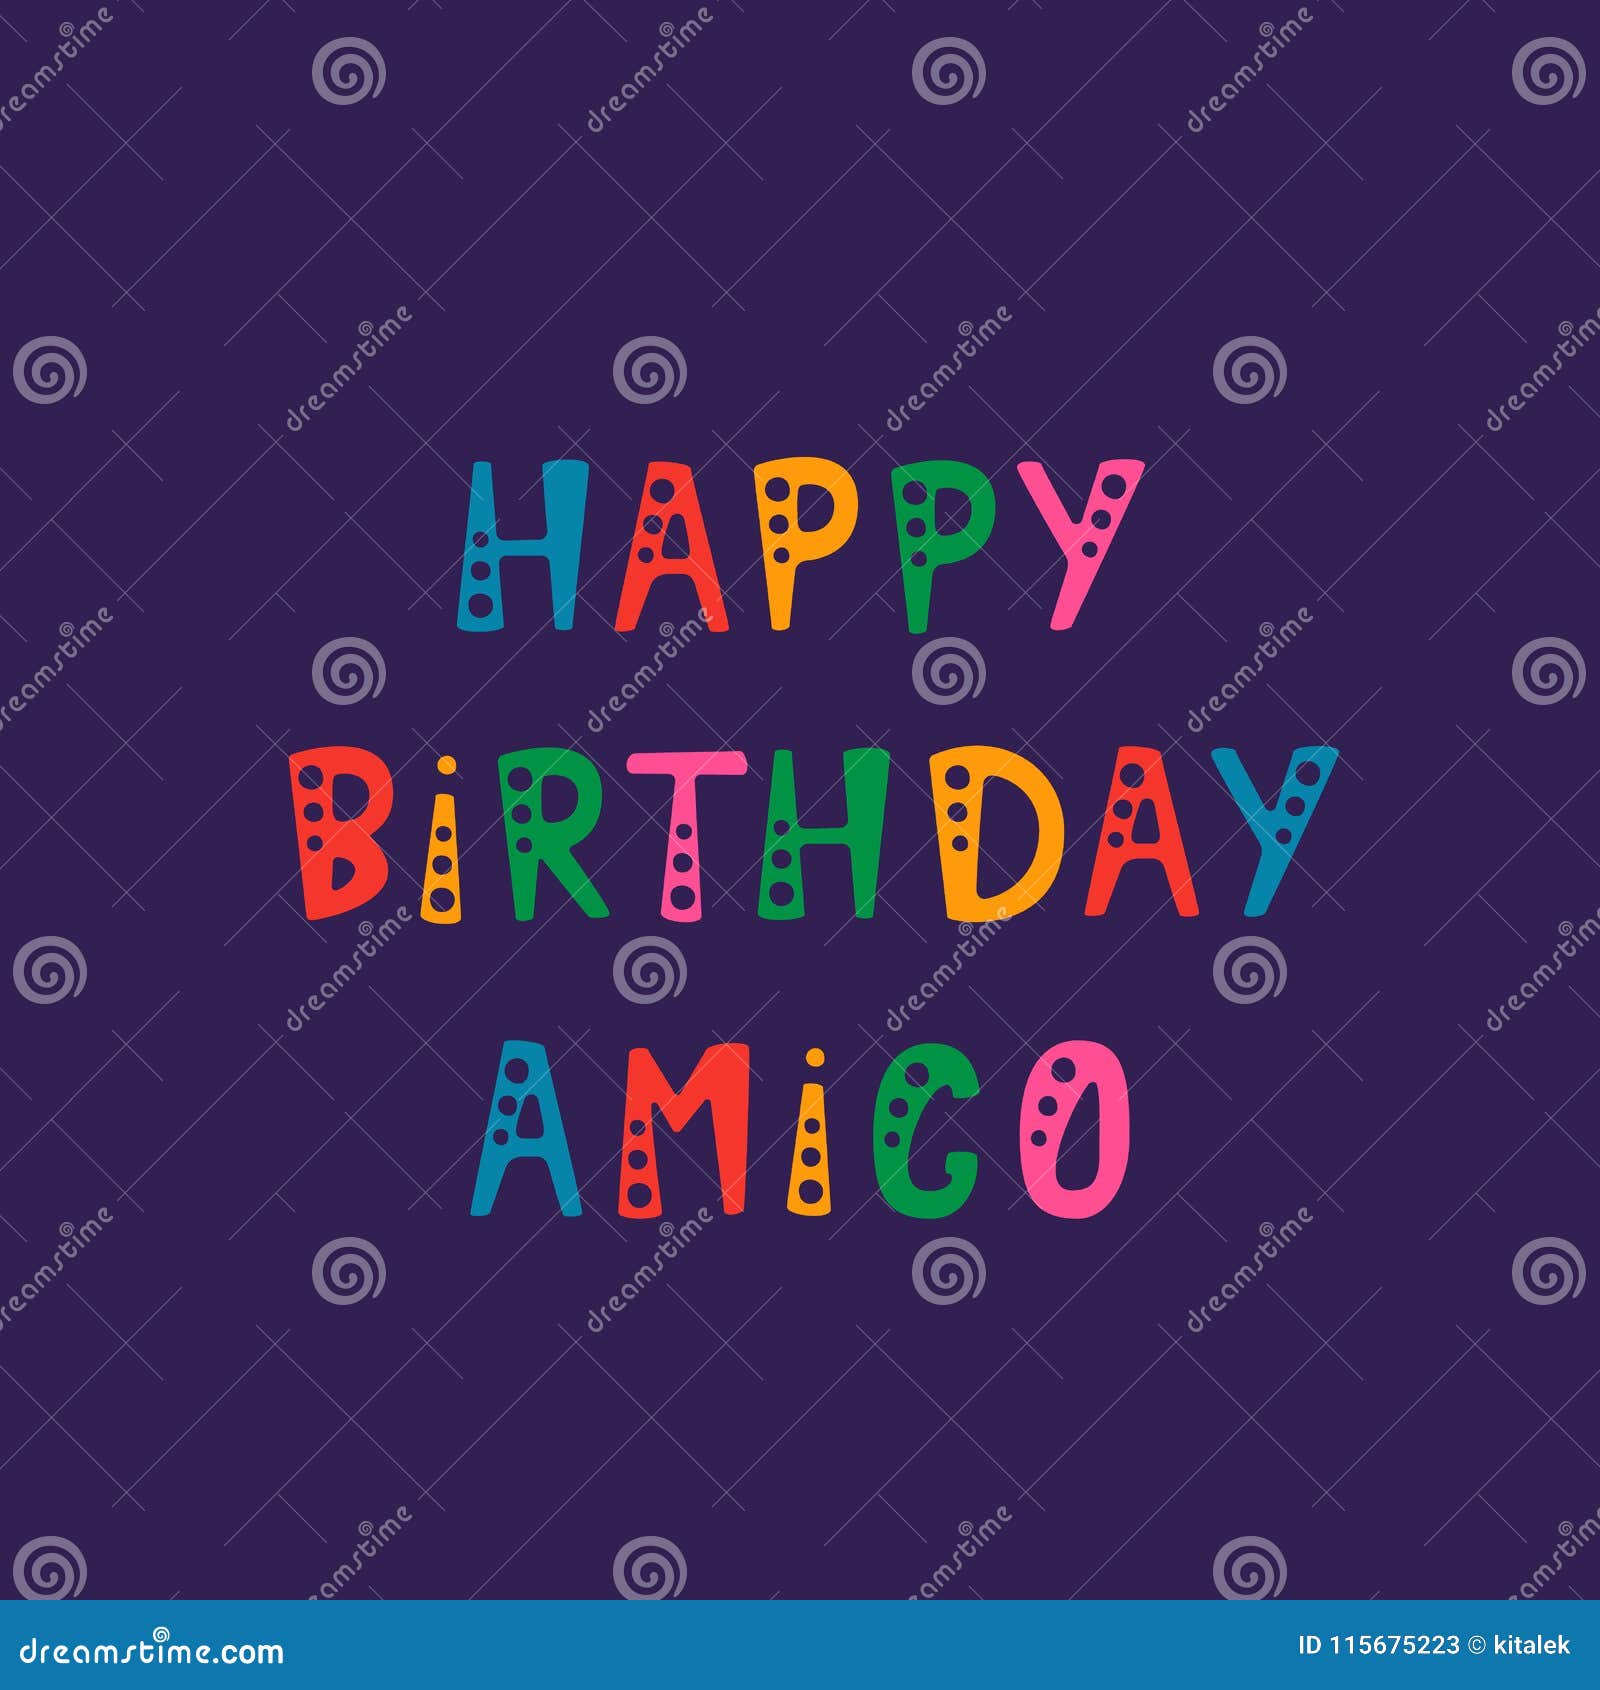 handwritten lettering of happy birthday amigo on purple background